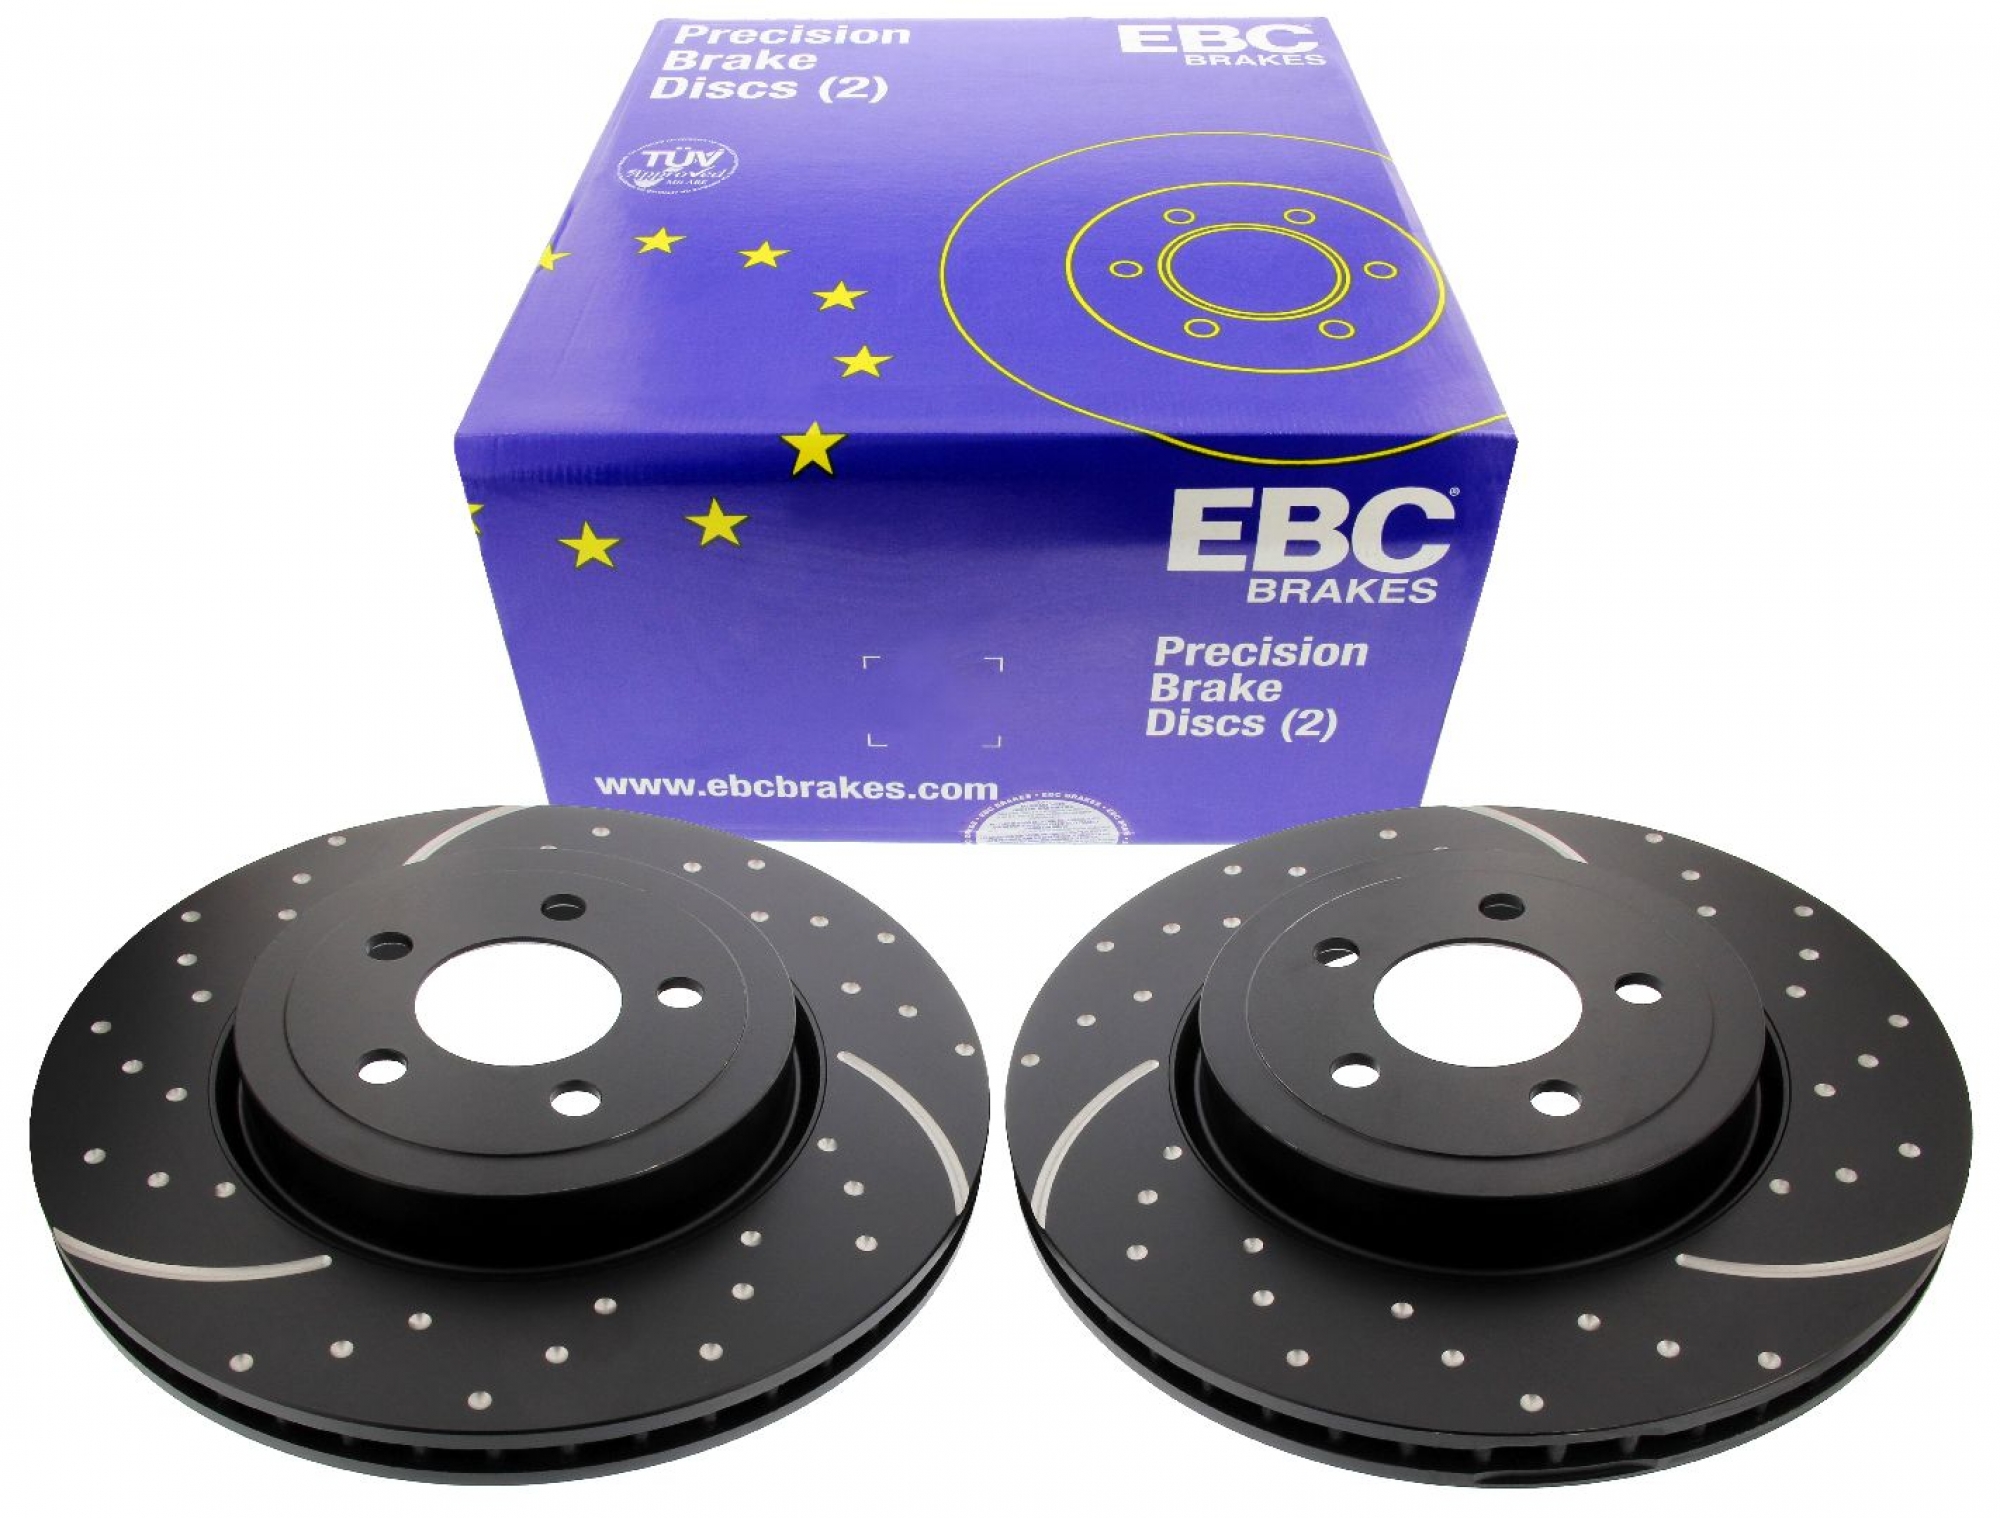 EBC-Bremsscheiben, Turbo Groove Disc Black (2-teilig), VA, Chrysler